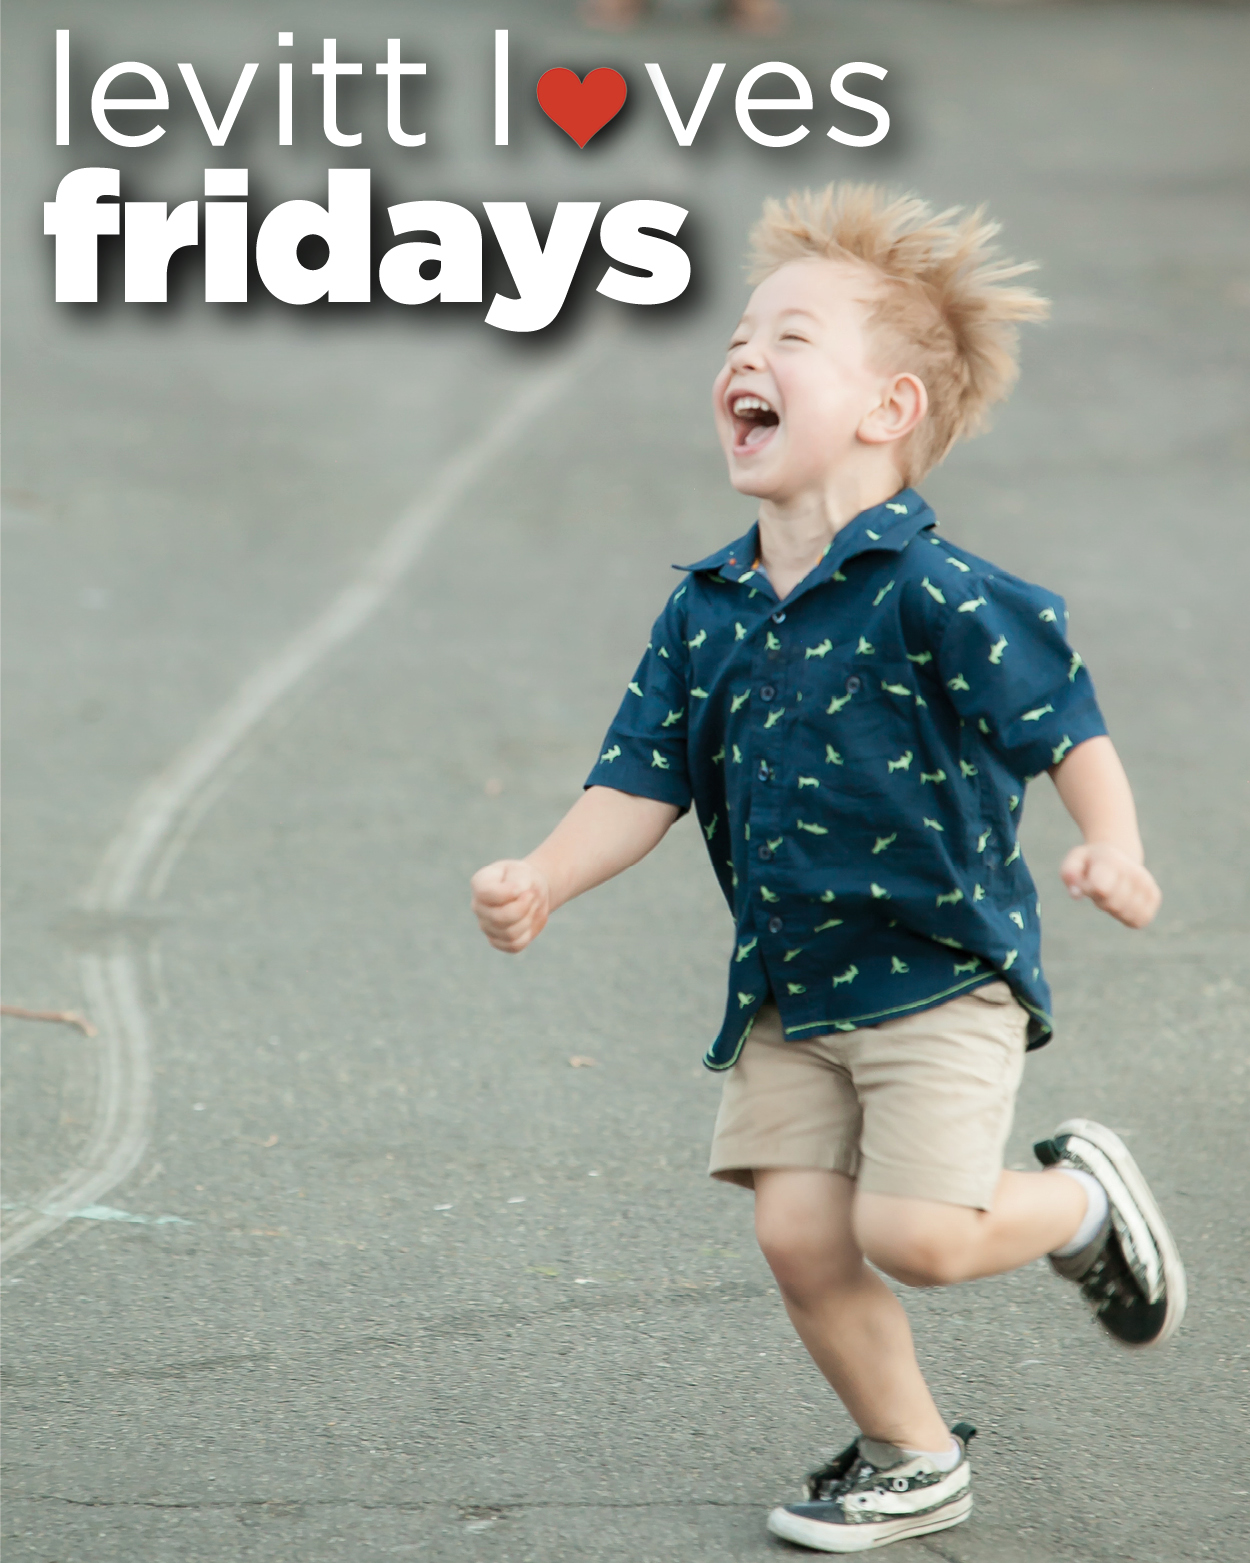 Levitt loves Fridays